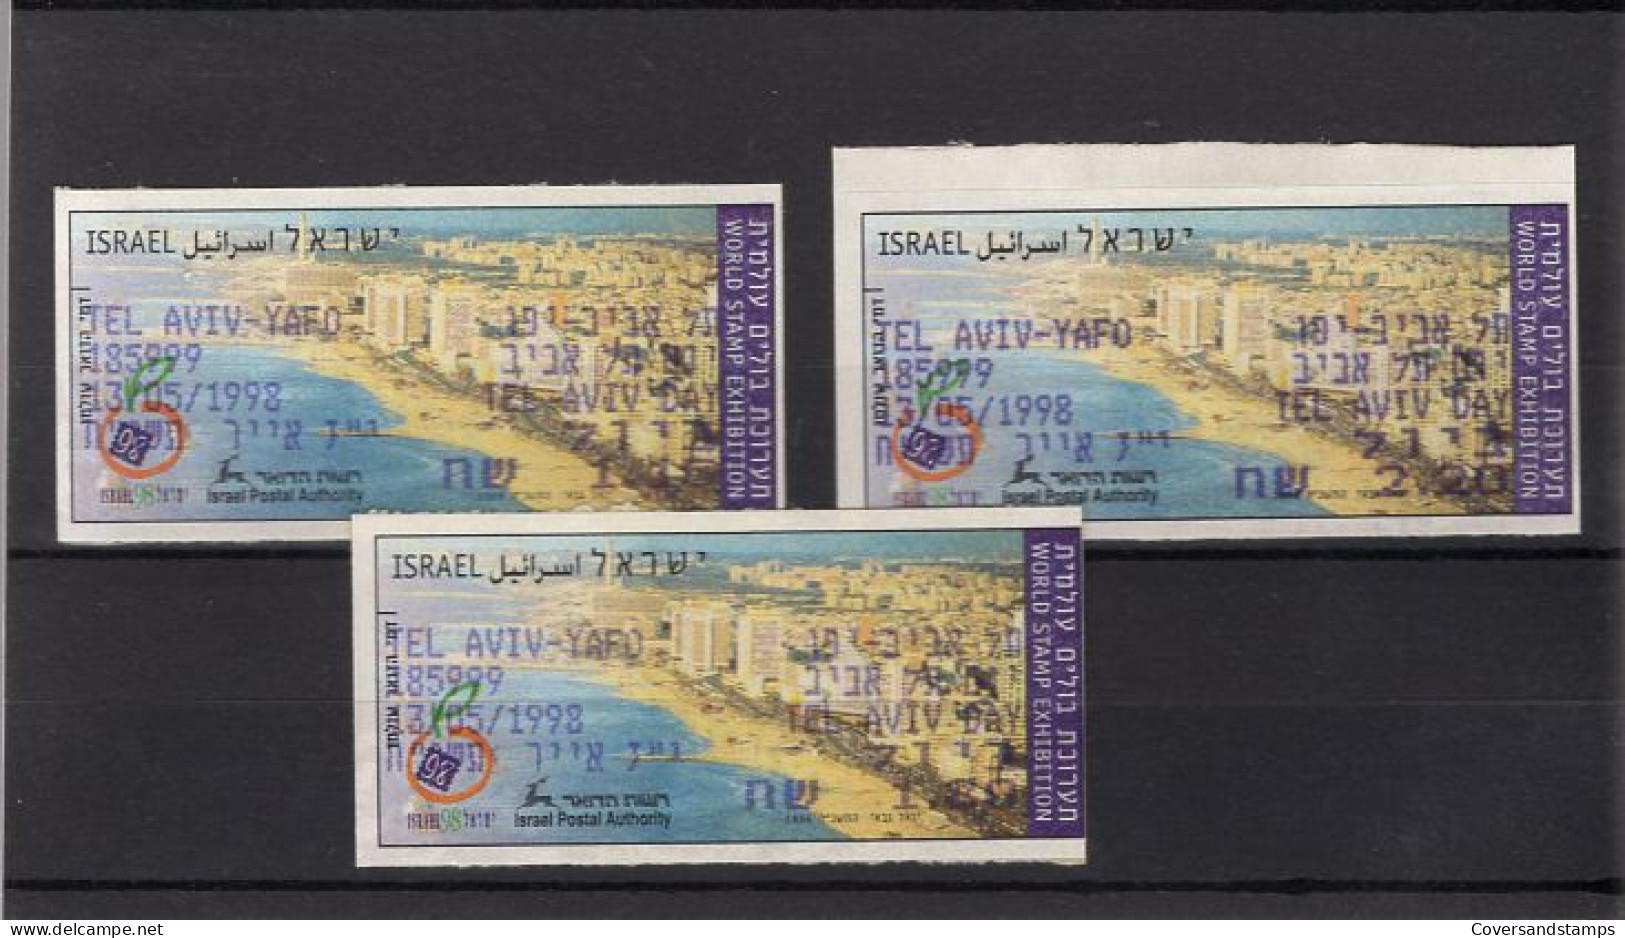  Israêl - World Stamp Exhibition Tel Aviv-Yafo 1998 ** MNH - Vignettes D'affranchissement (Frama)